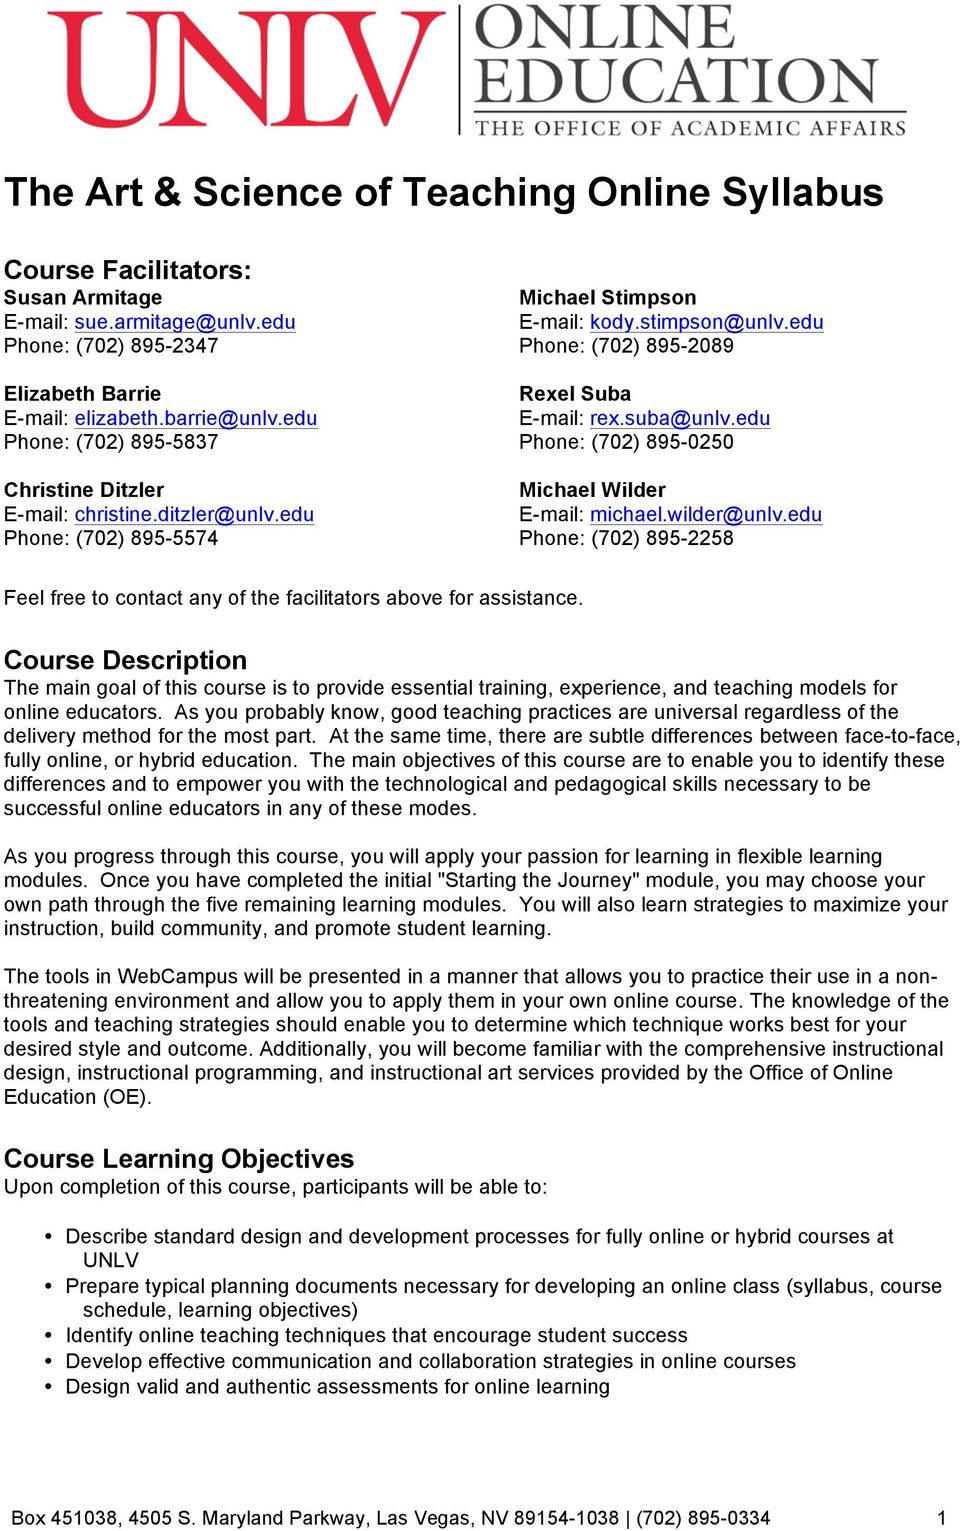 The Art Science Of Teaching Online Syllabus Pdf Free Download